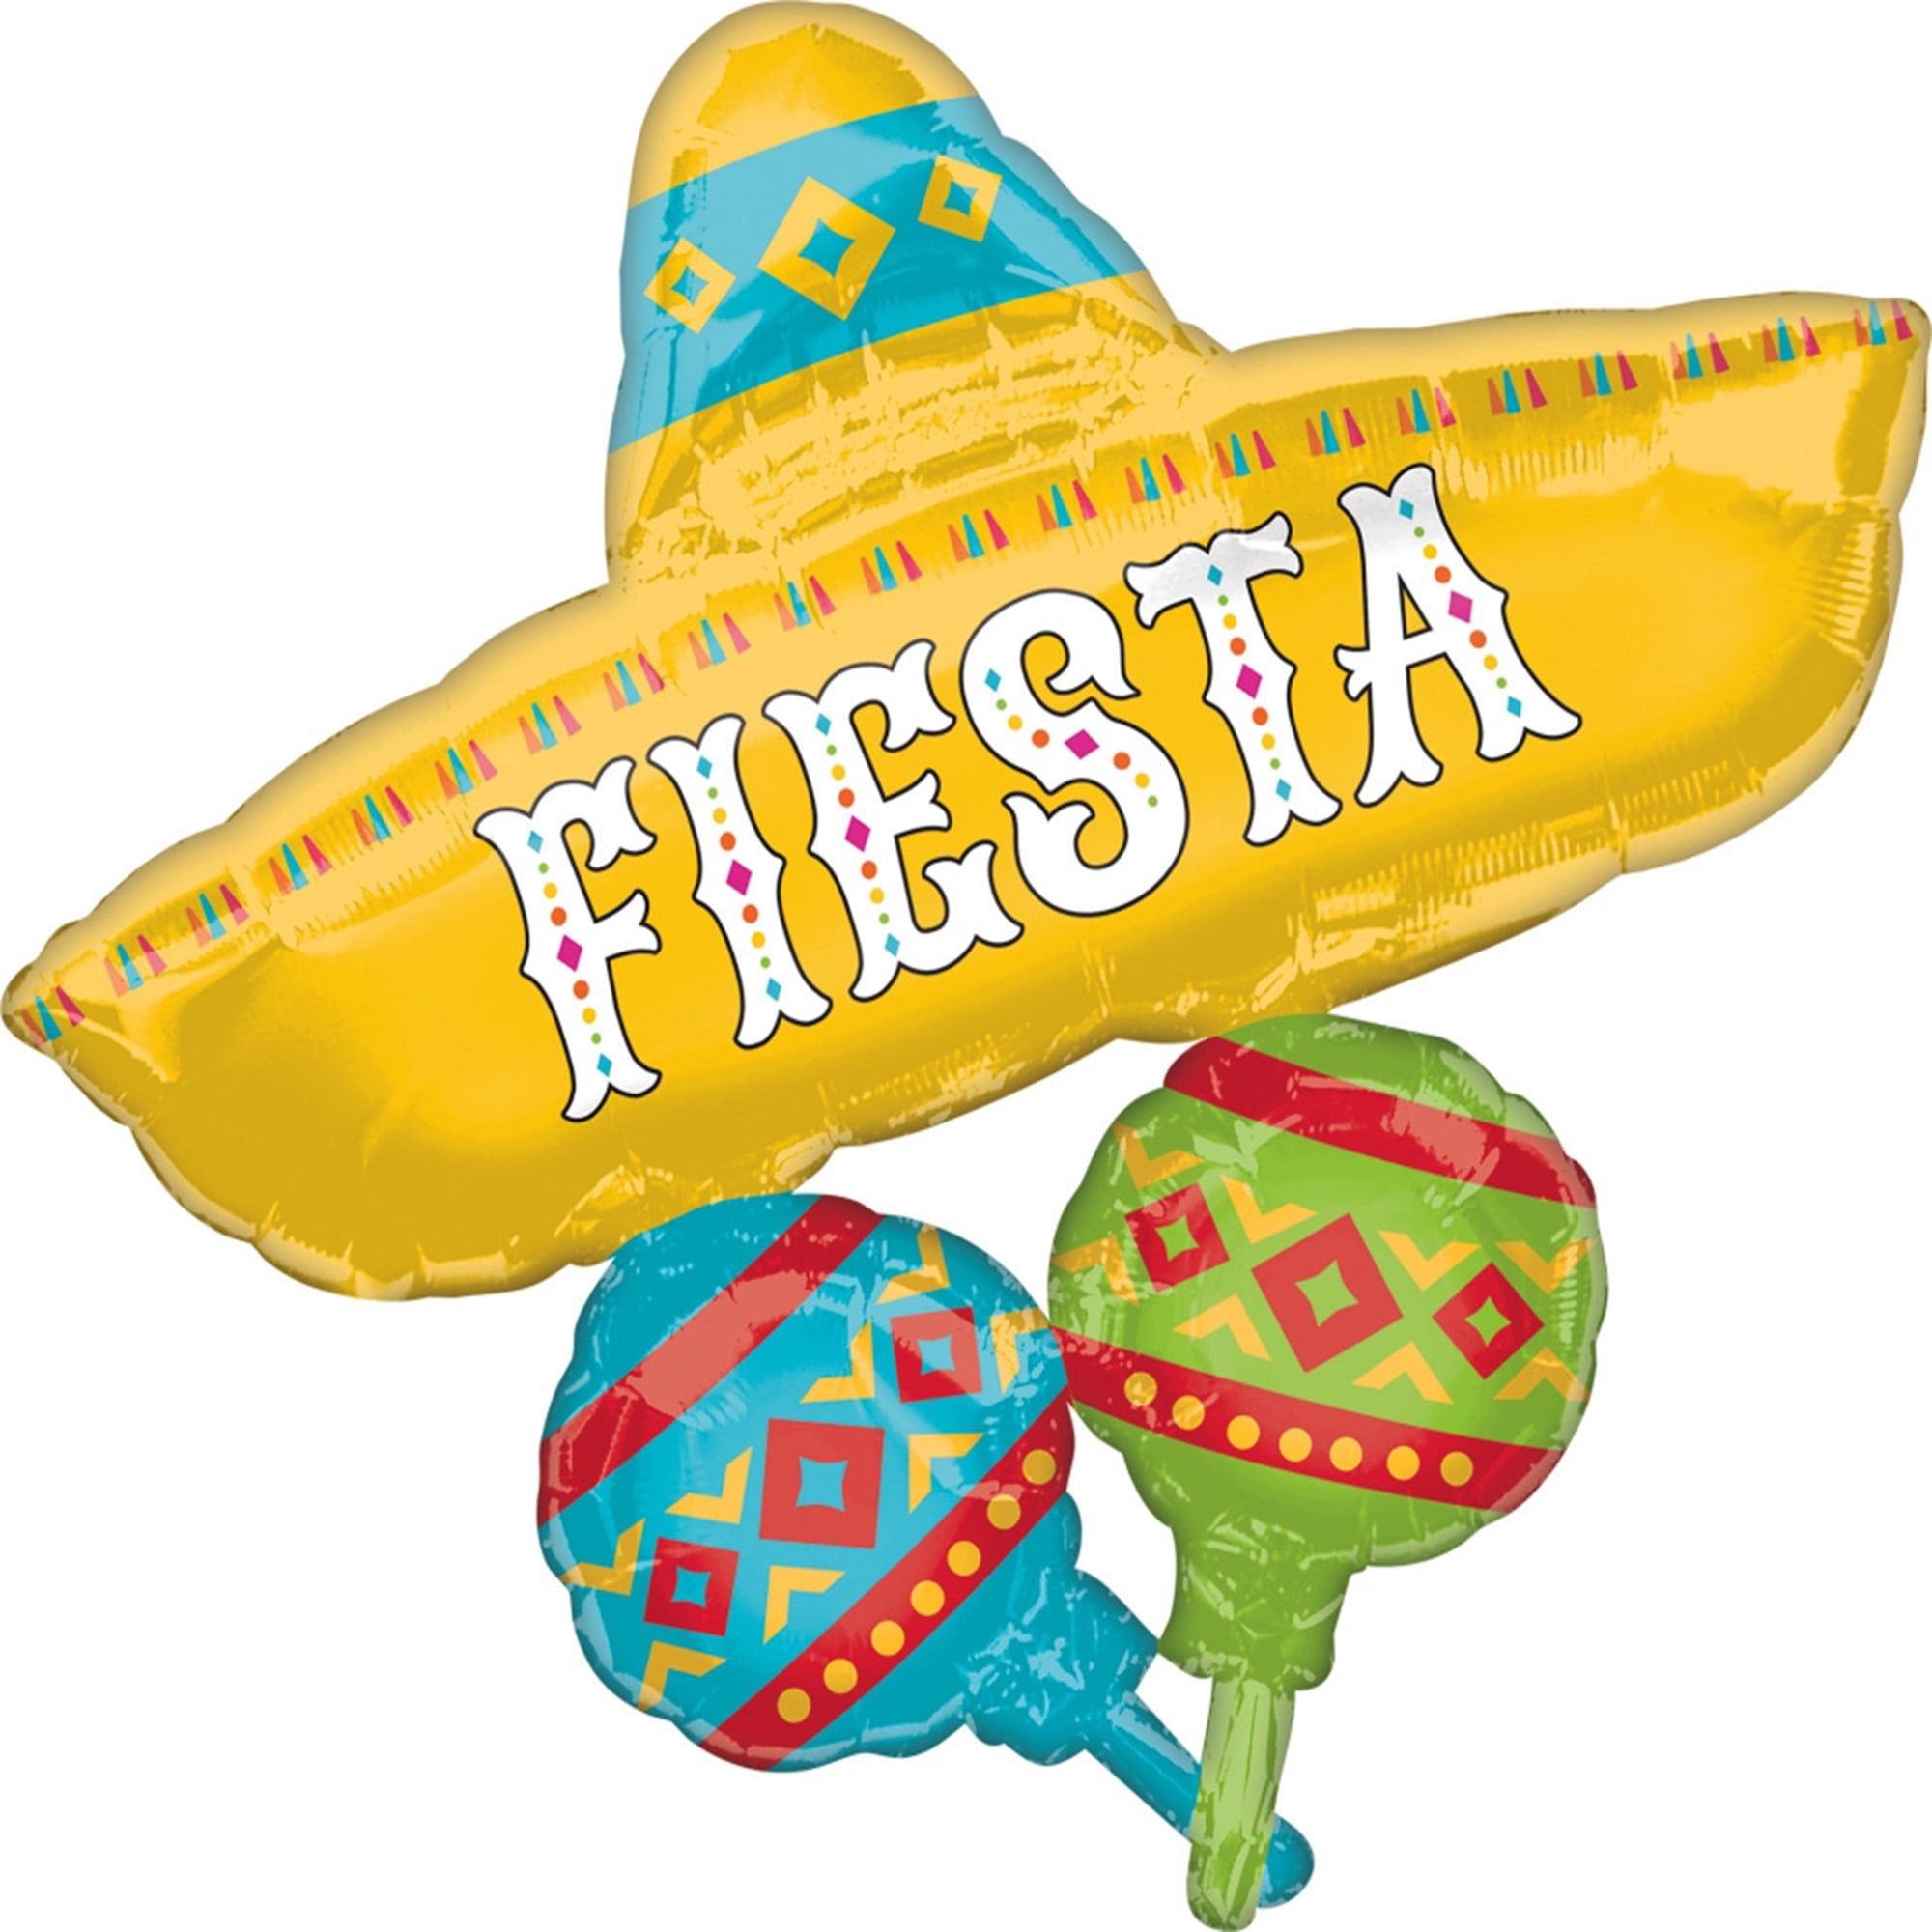 Fiesta Party Décor & Supplies: Papel Picado, Pinatas, Maracas, Flowers,  Confetti Eggs - Alamo Fiesta